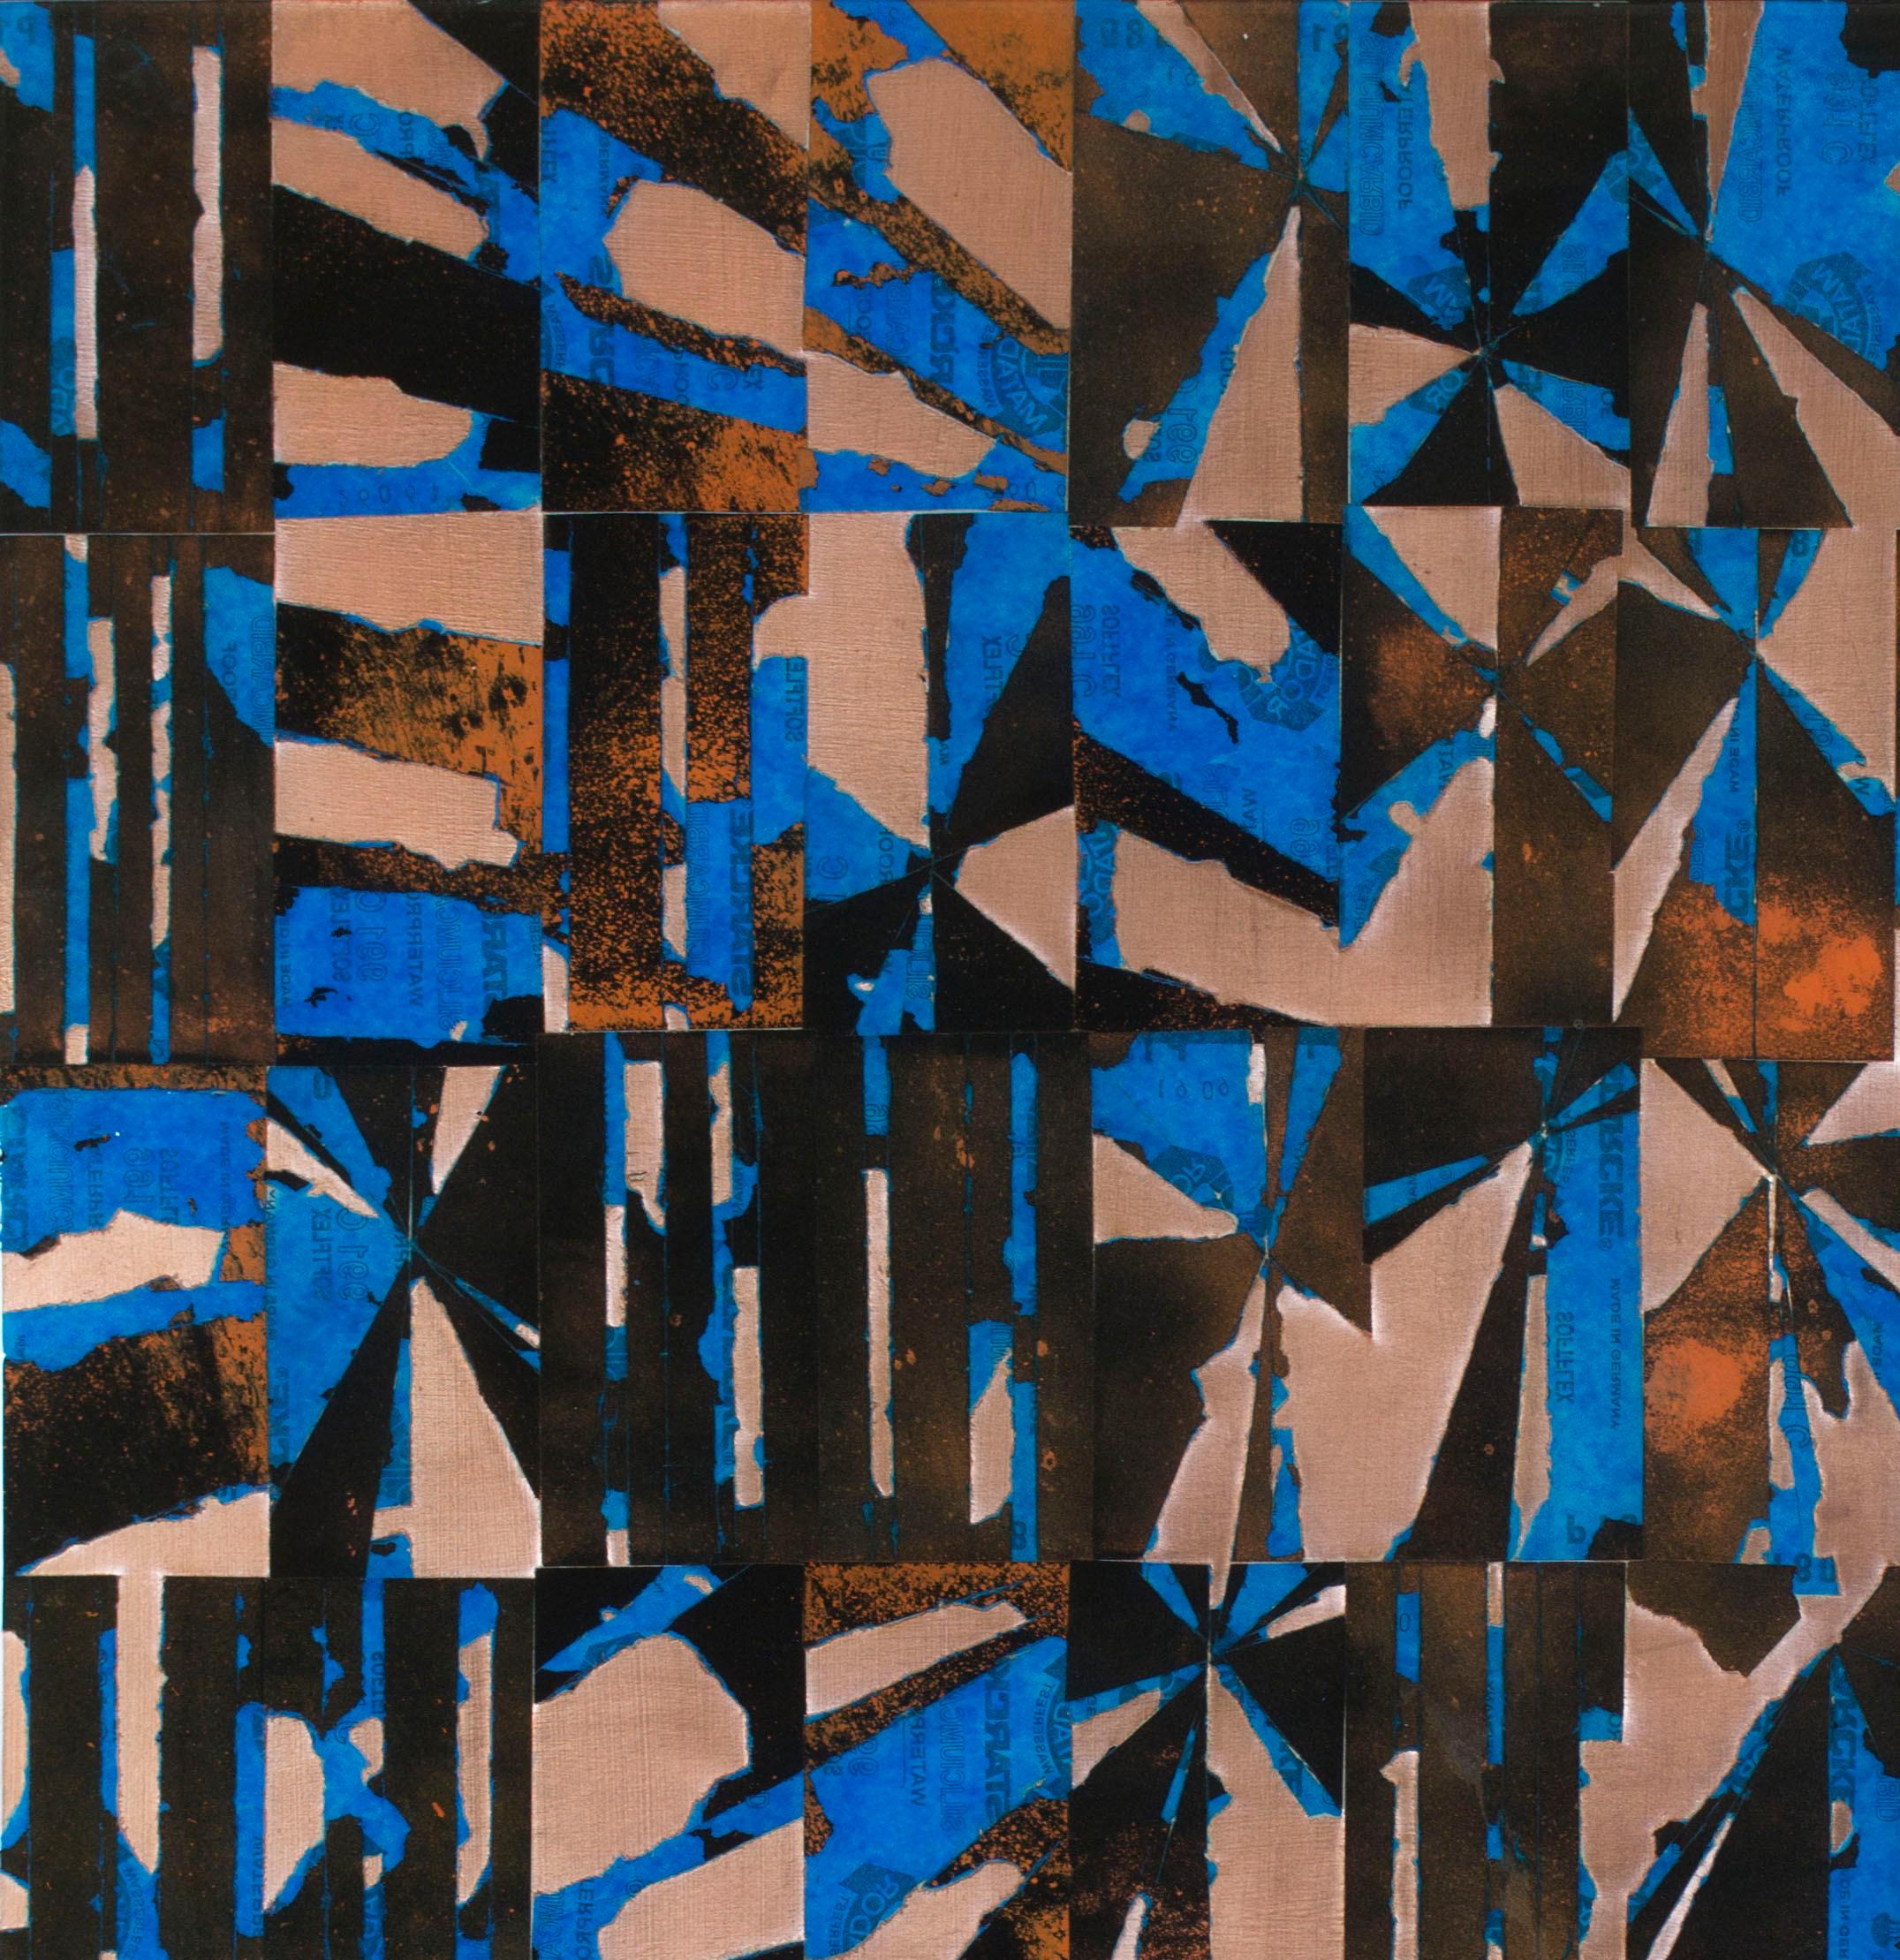 Brickyard Blues - Abstract Mixed Media Art by Scott Andresen